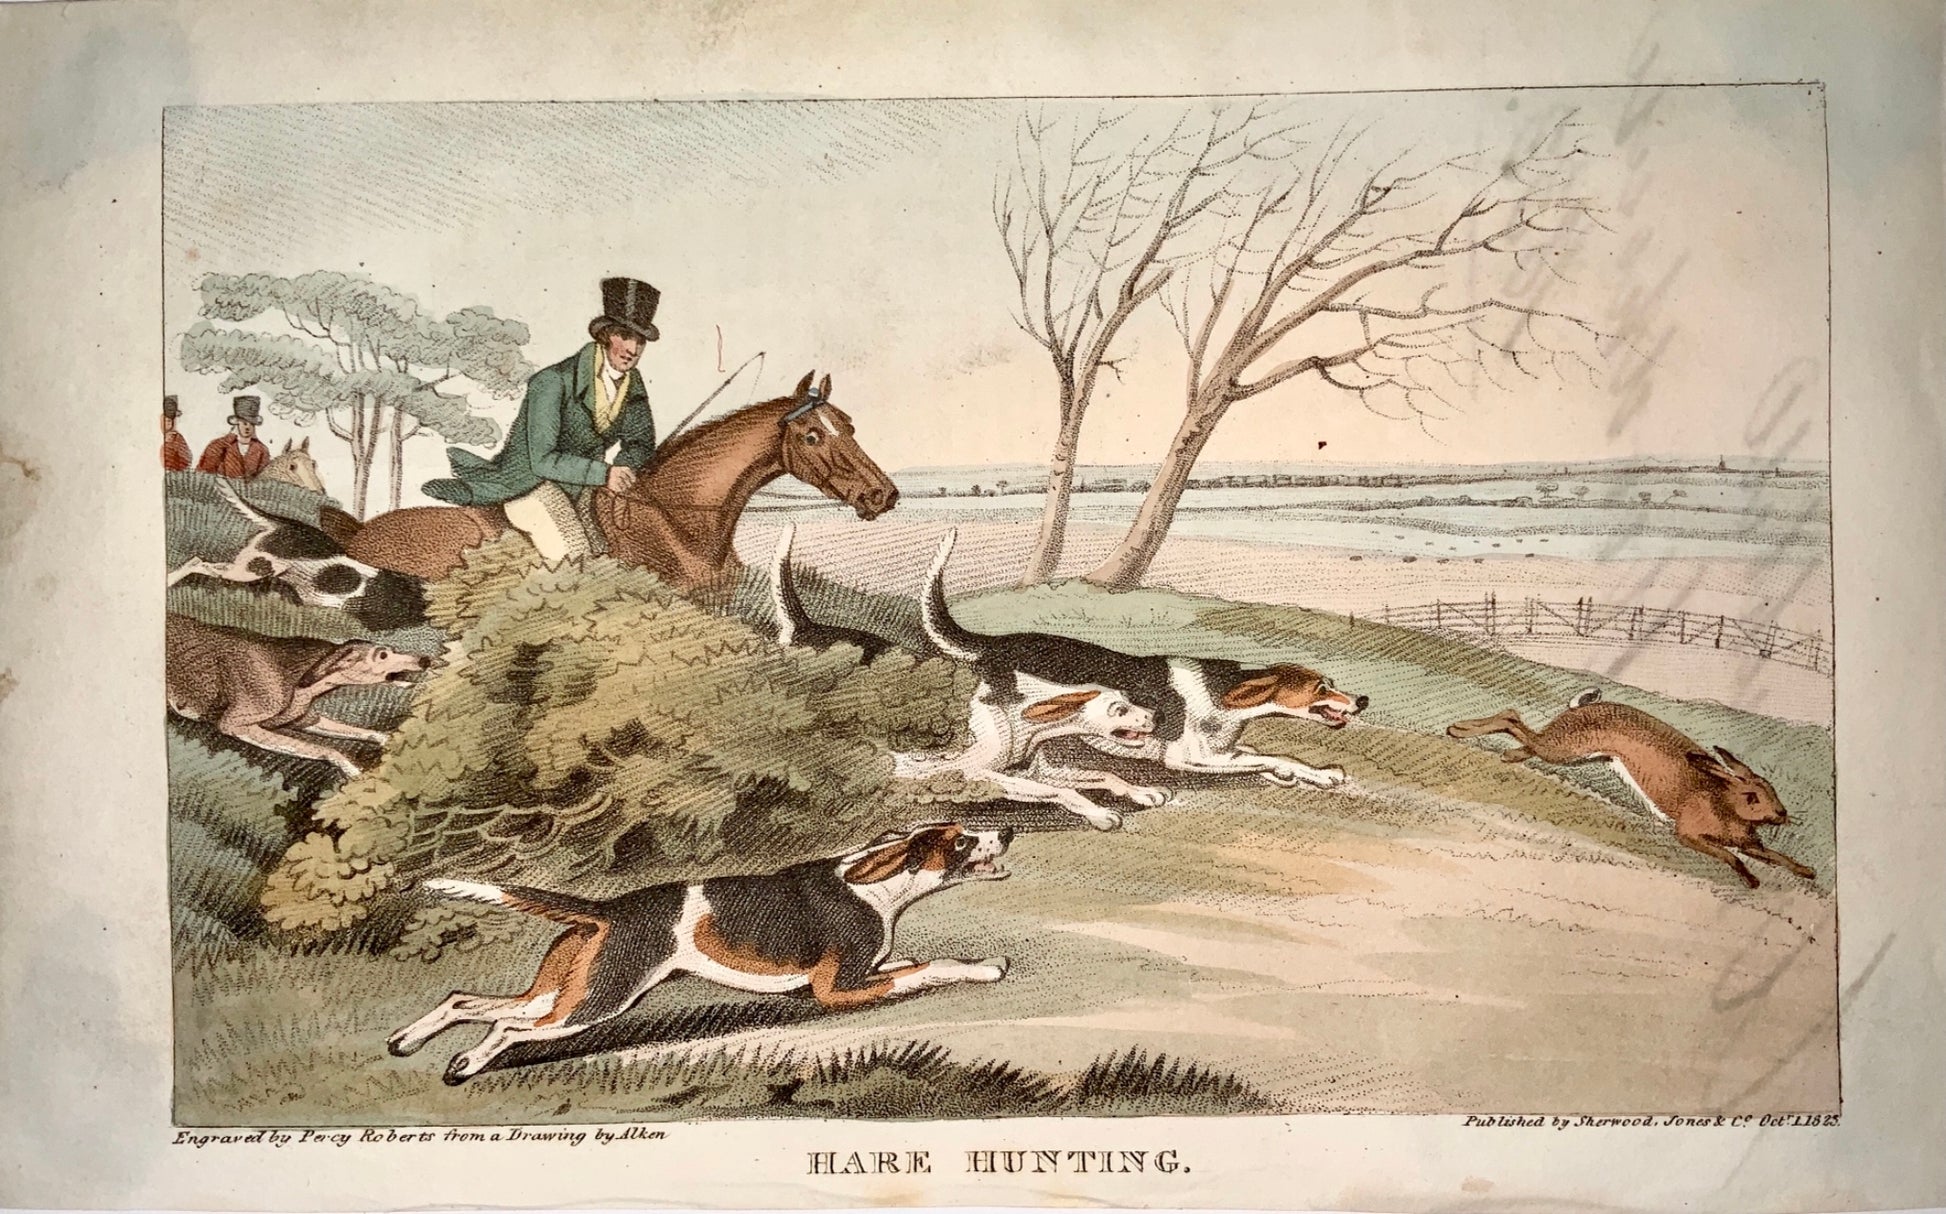 1823 Sherwood after Alken - HARE HUNTING - hand coloured aquatint